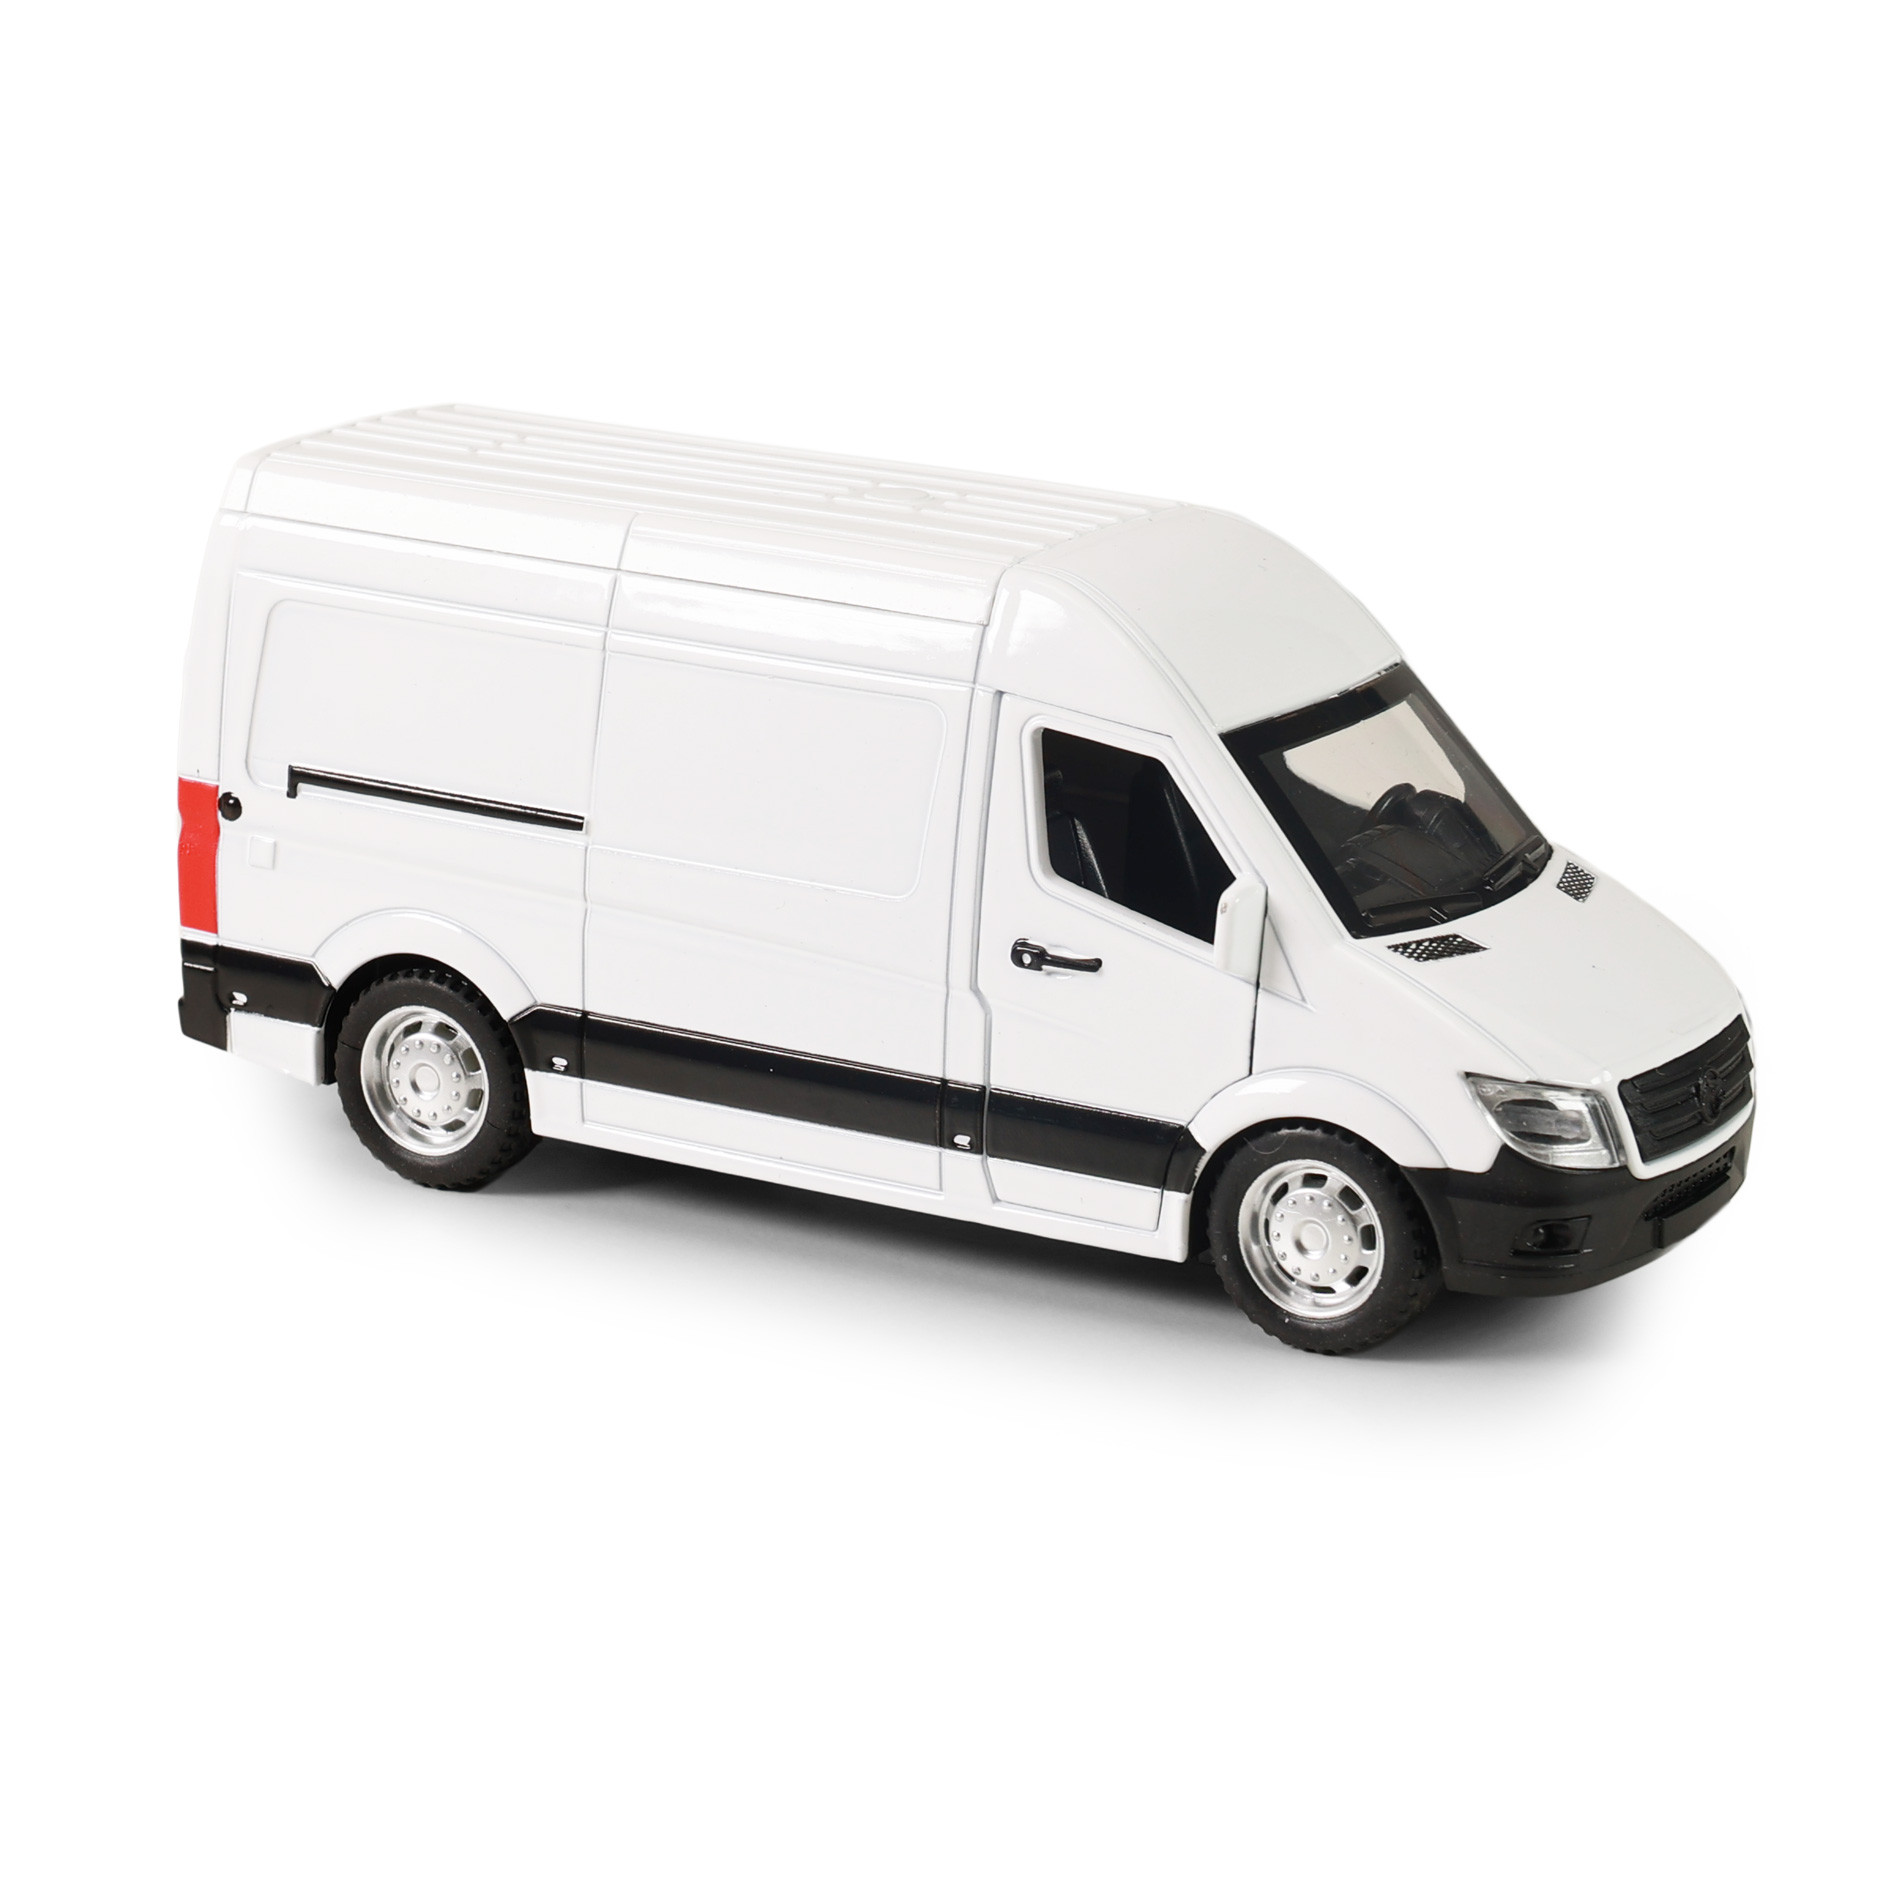 the Car delivery van metal 14,5 cm